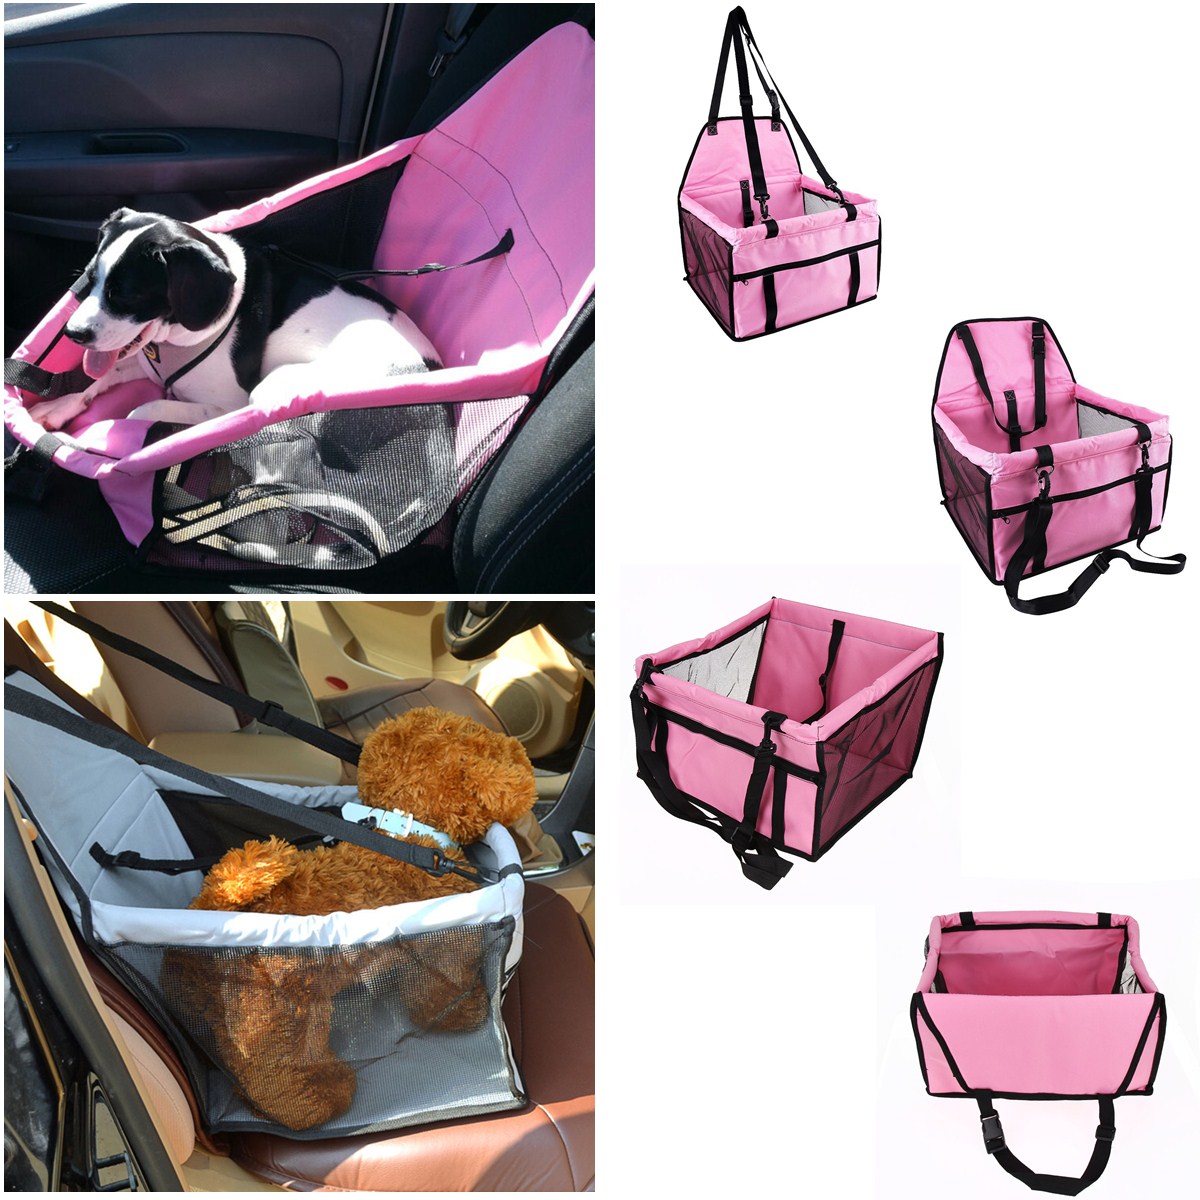 Foldable-Pet-Dog-Car-Seat-Cover-Safe-Basket-Protector-Puppy-Travel-Pet-Carrier-Bag-1178851-1